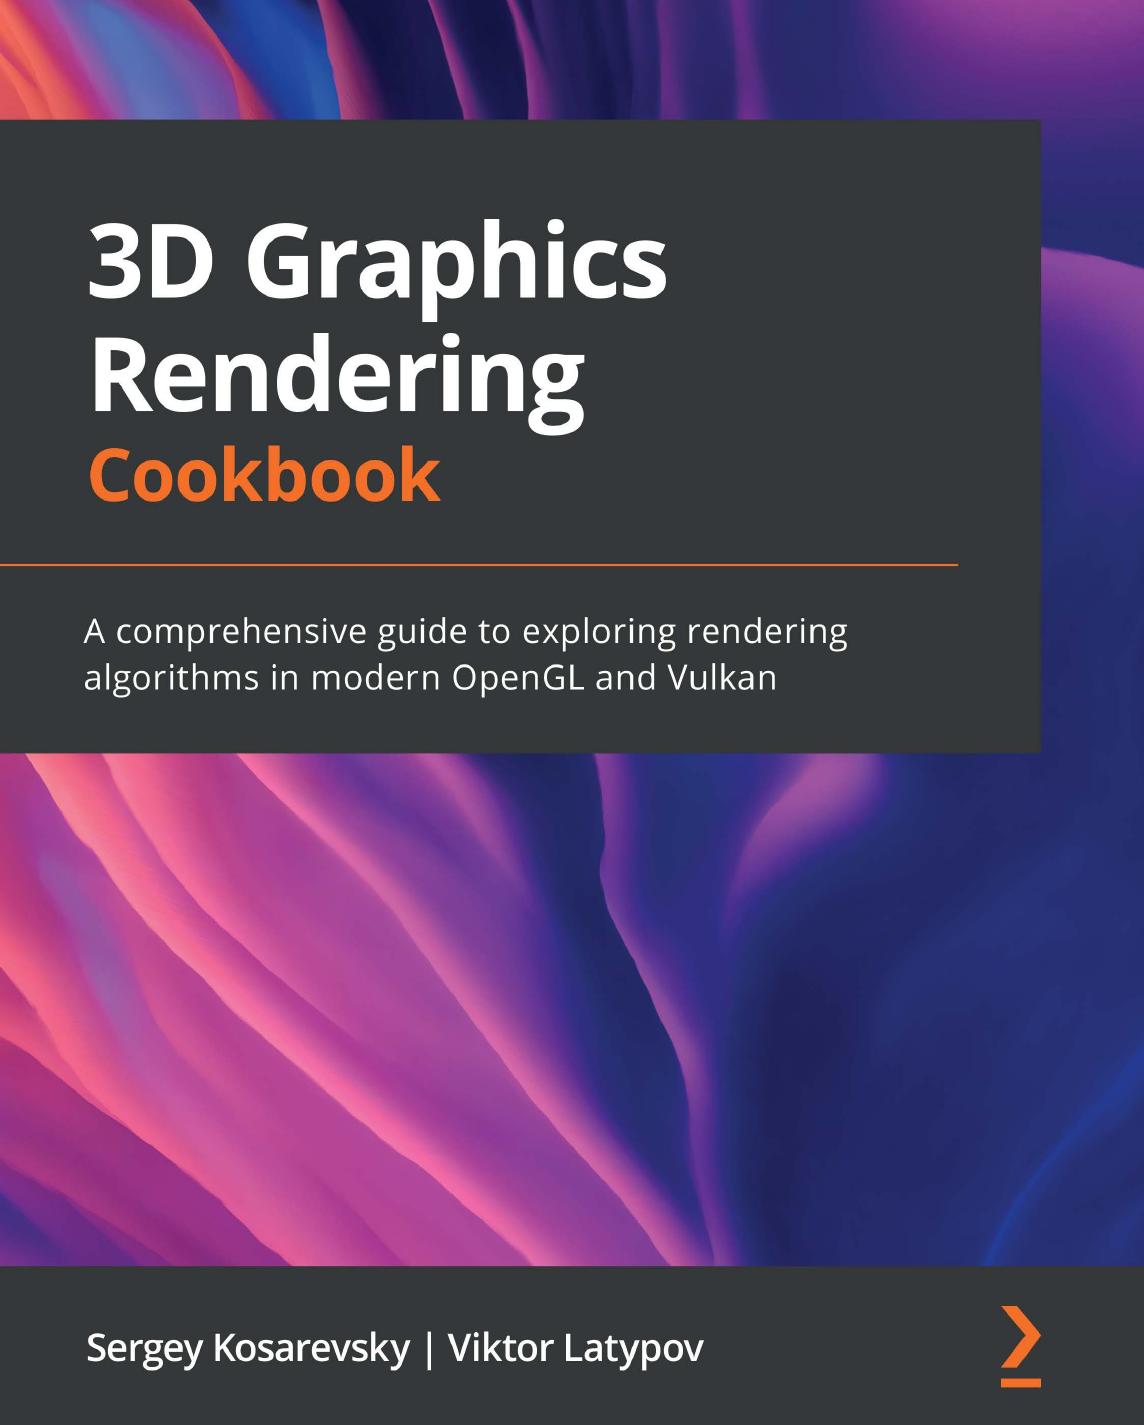 3D Graphics Rendering Cookbook: A Comprehensive Guide to Exploring Rendering Algorithms in Modern OpenGL and Vulkan